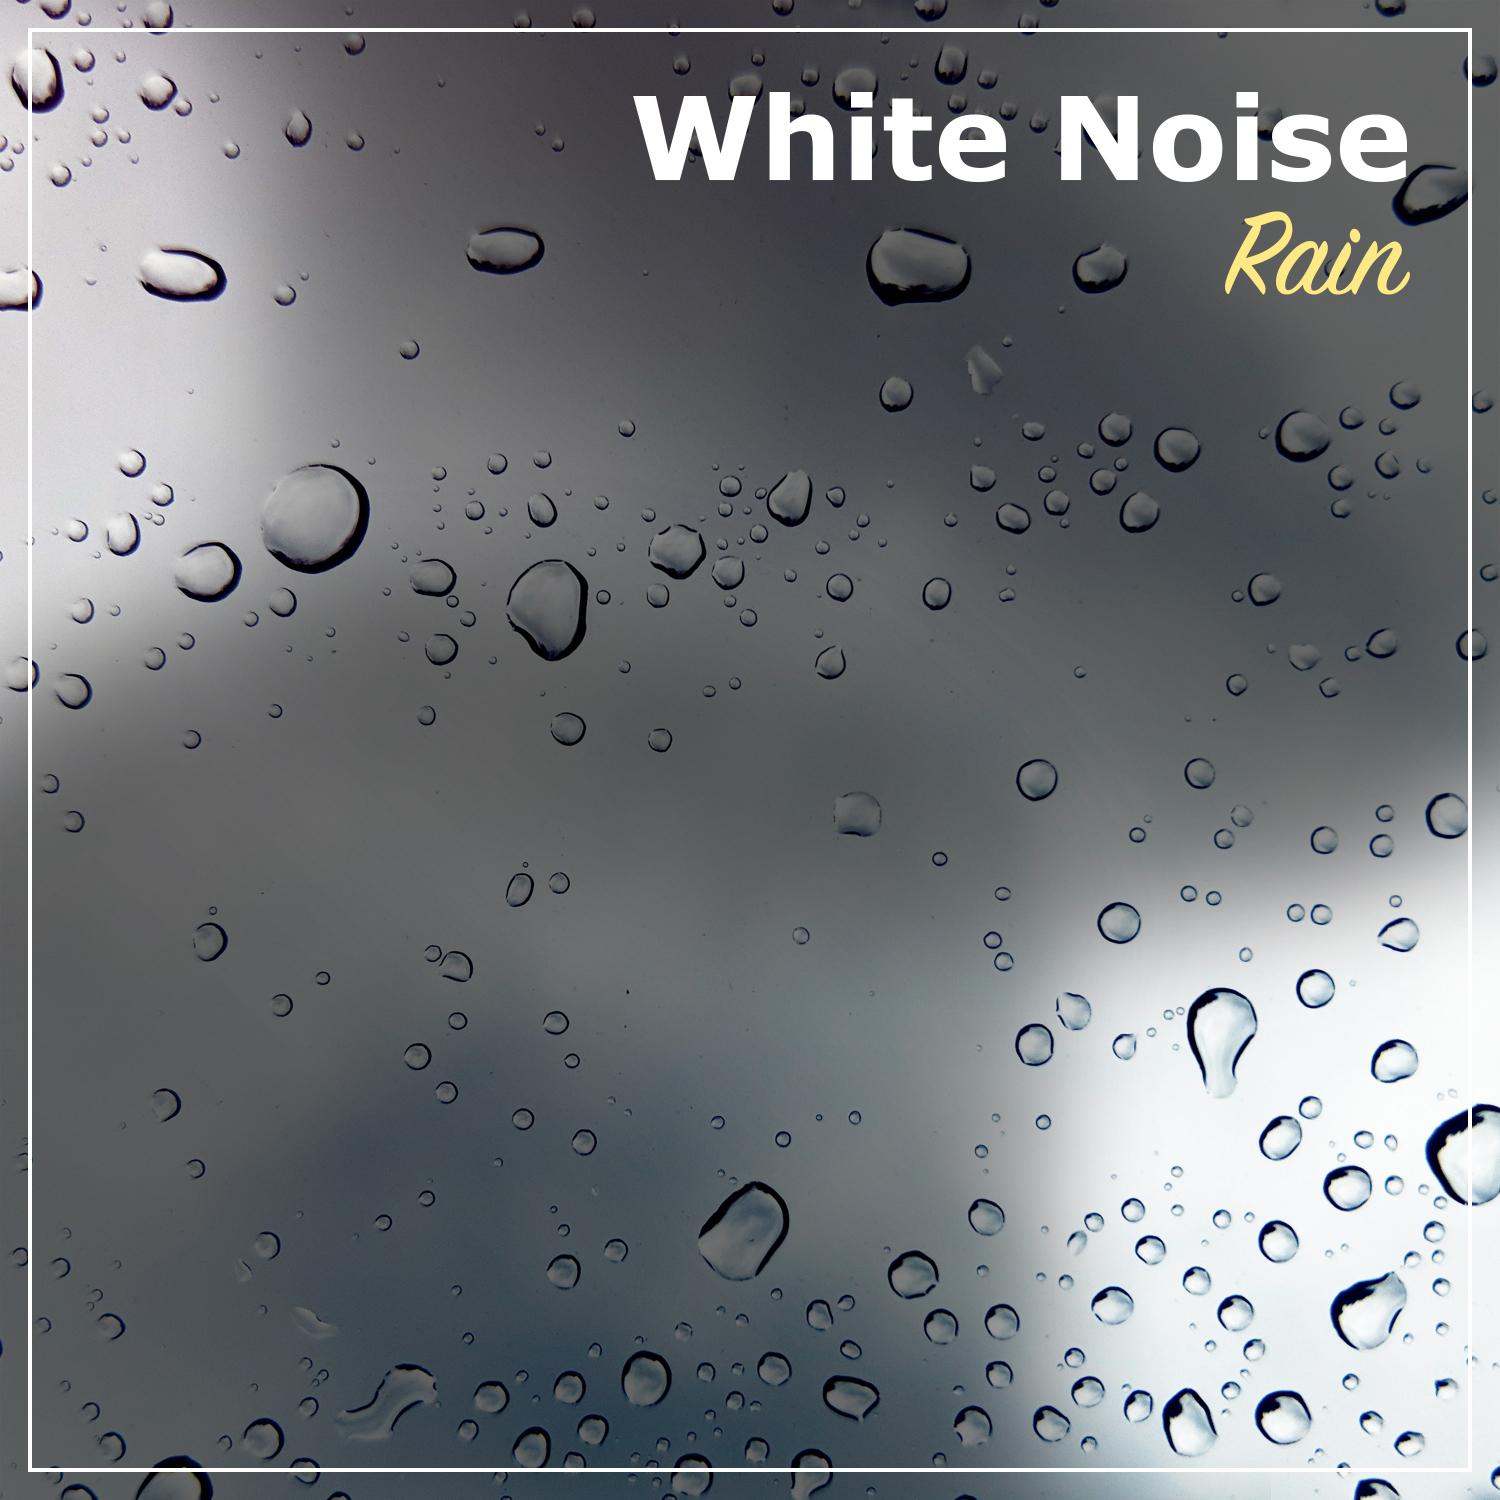 15 White Noise Rain Sounds - Zen Music from Nature